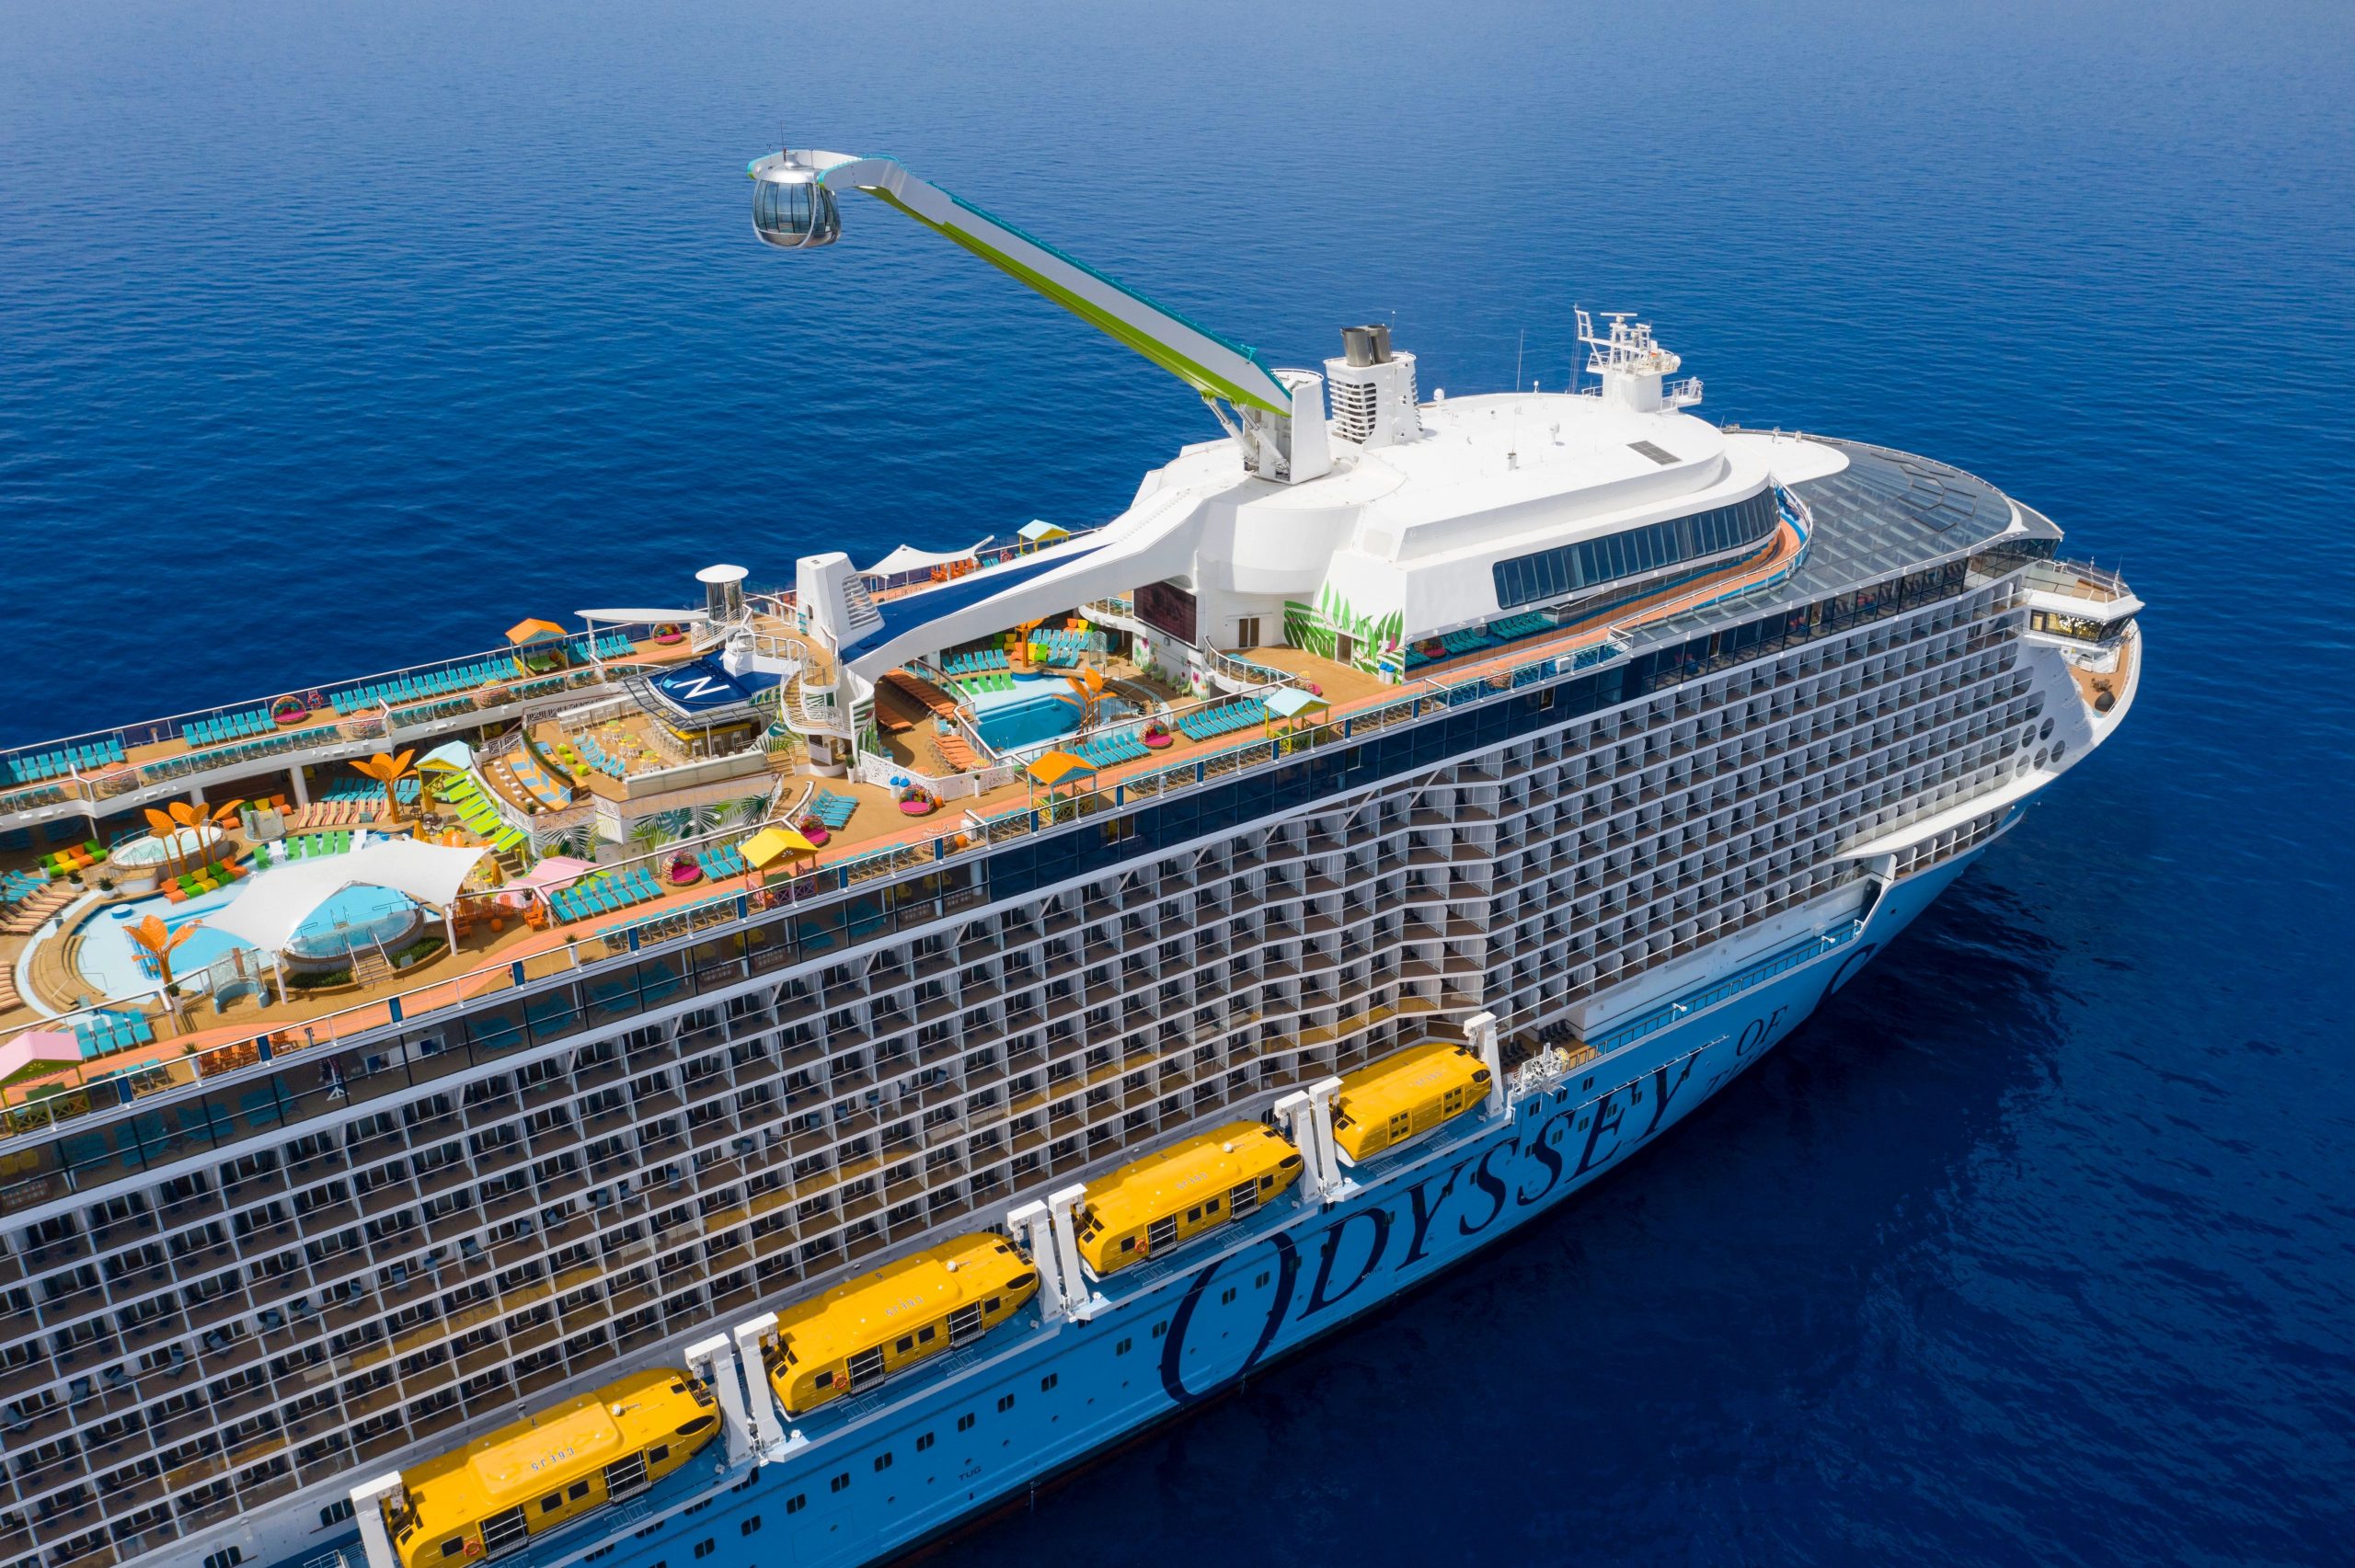 Cruise Ships – Introducing Royal Caribbean’s Quantum Class Cruise Ships